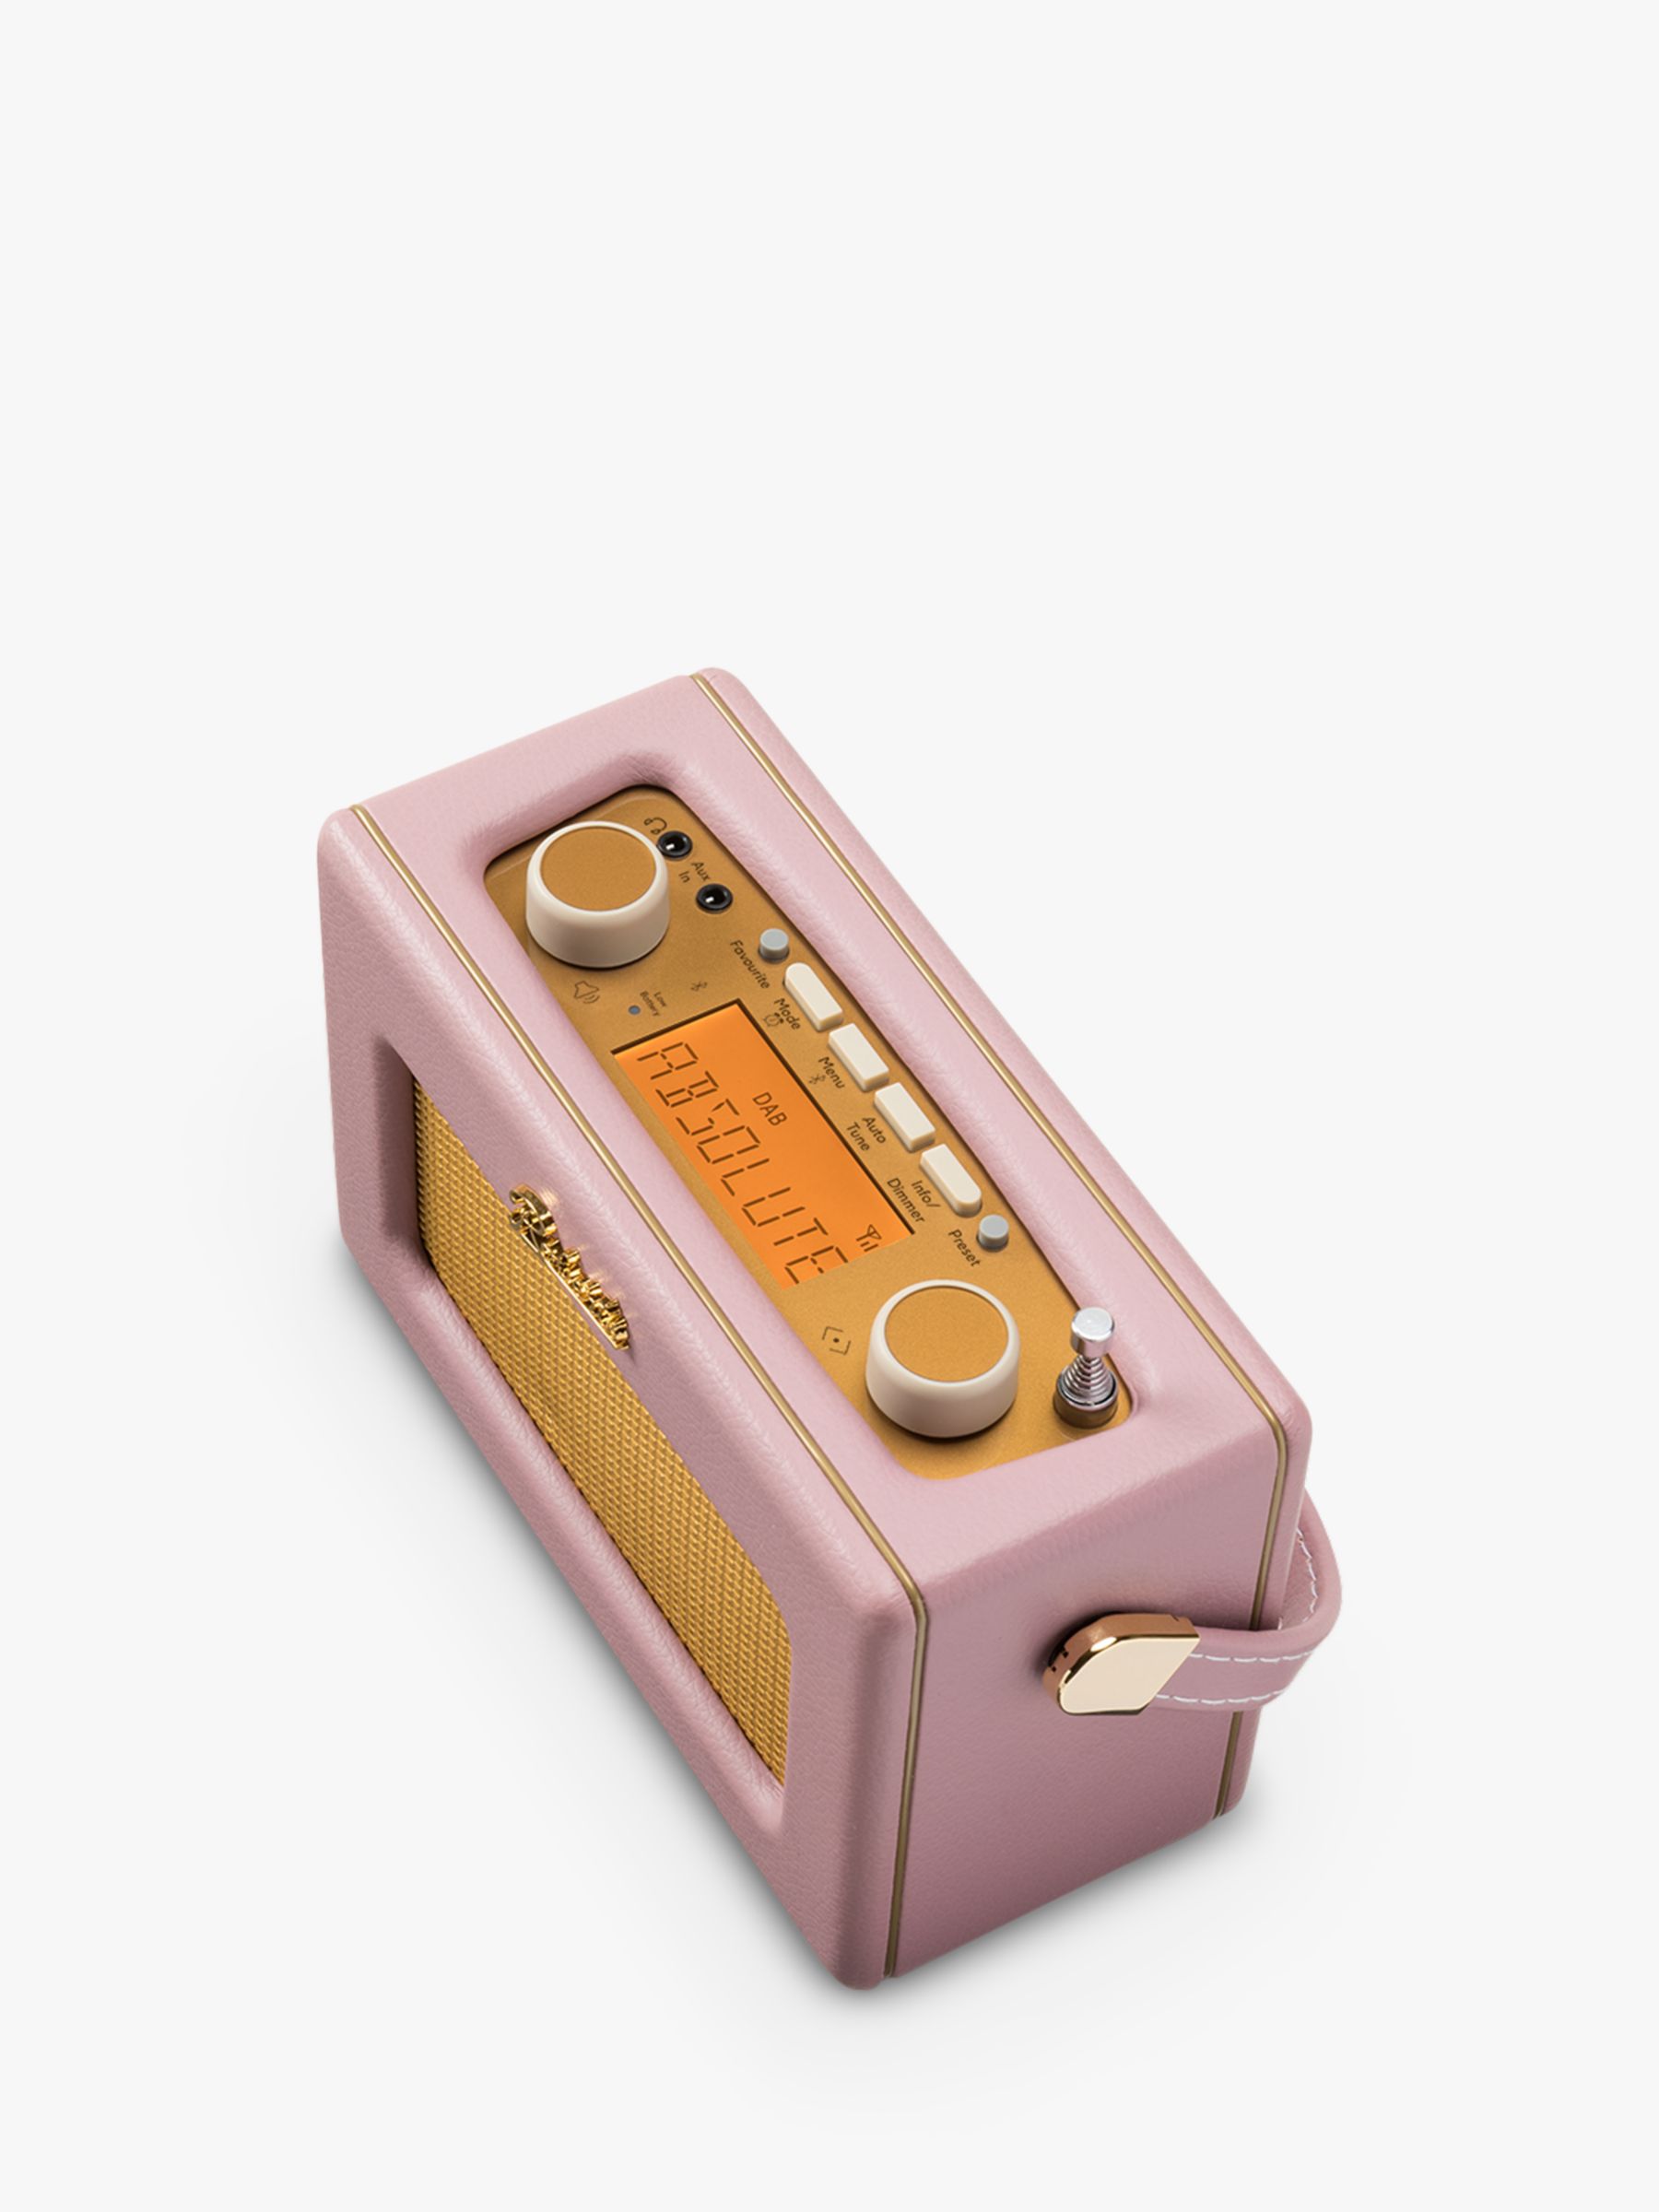 Roberts Revival Uno BT DAB/DAB+/FM Pastel Digital Cream Alarm, with Bluetooth Radio